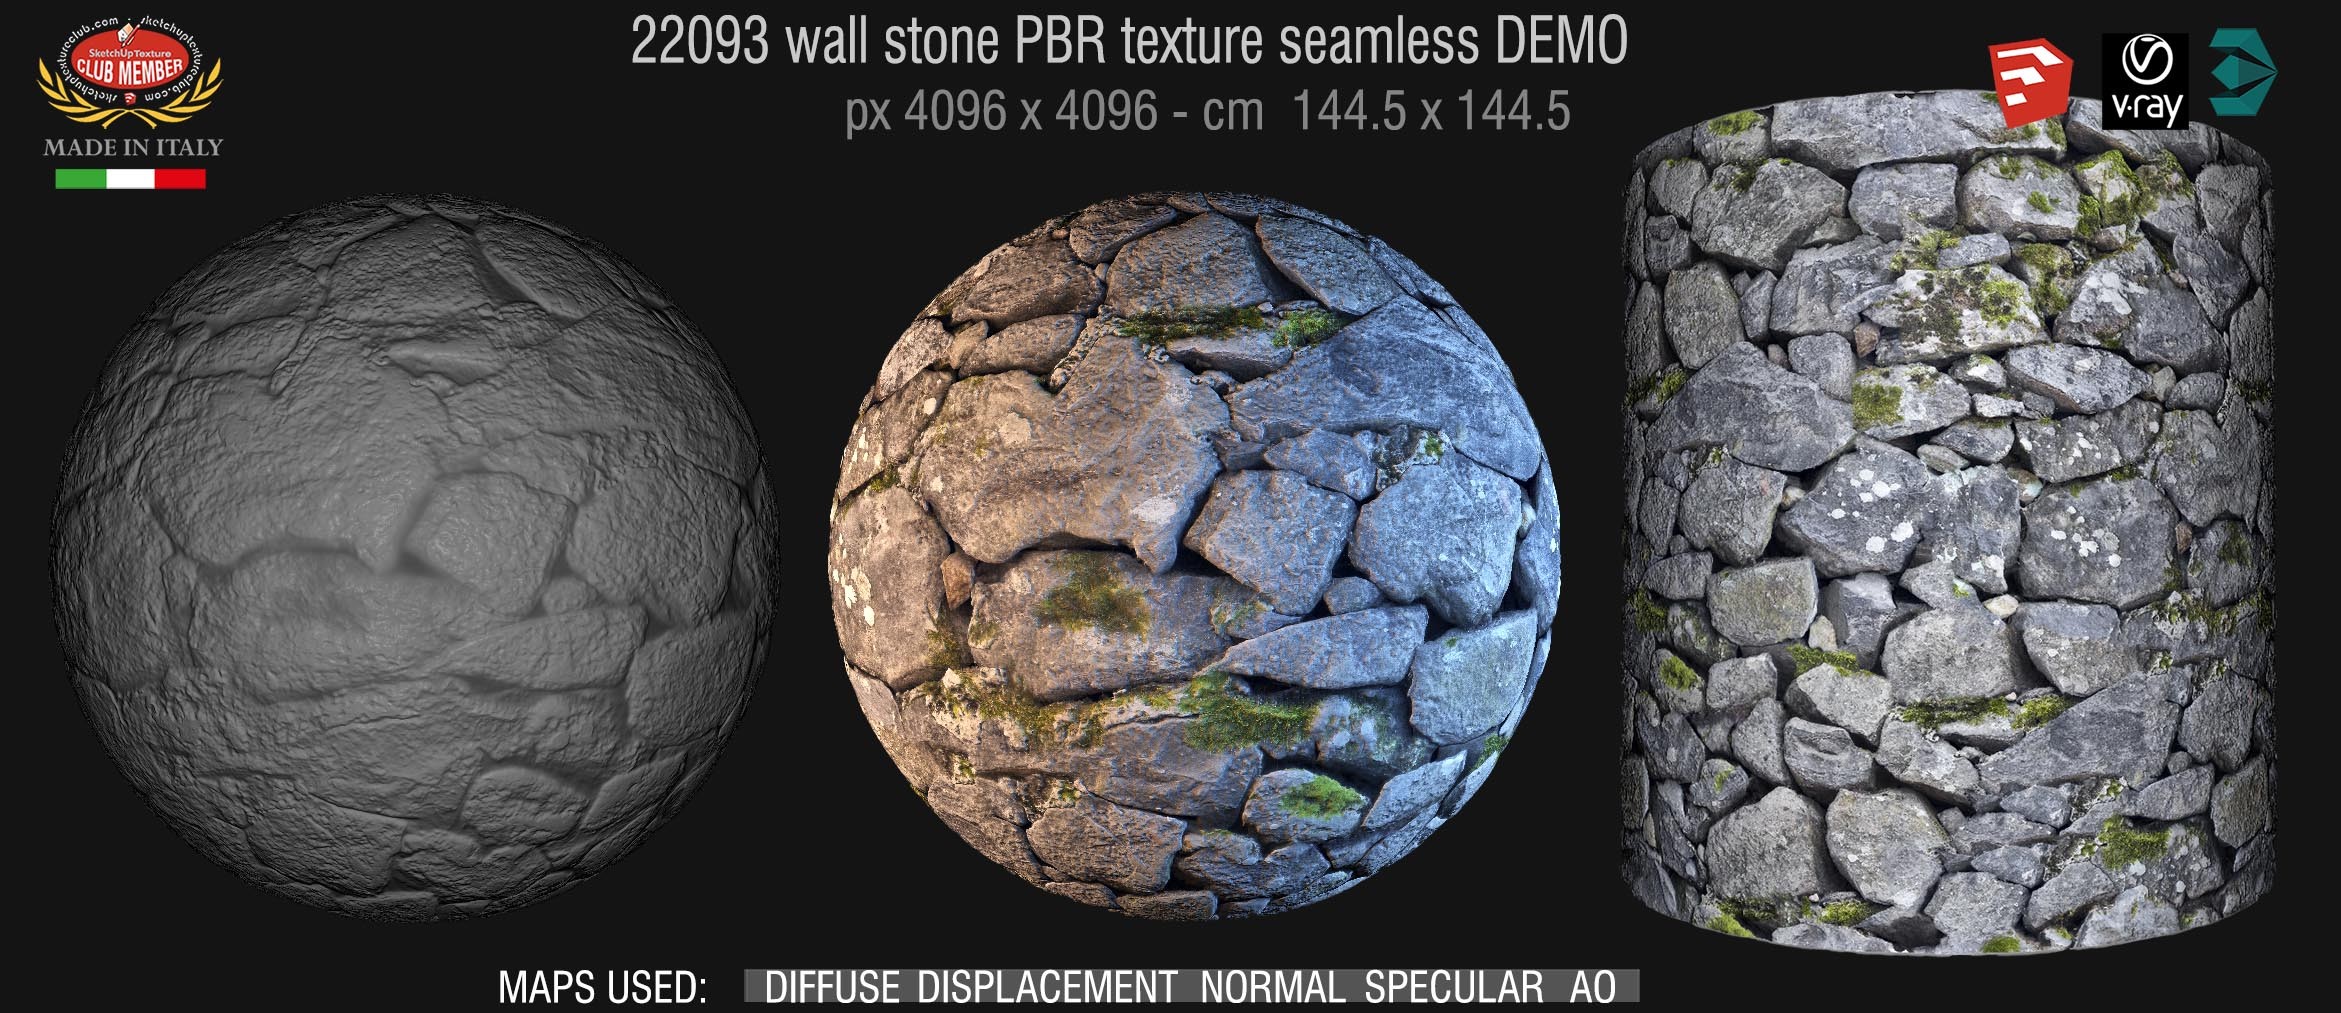 22093 wall stone PBR texture seamless DEMO